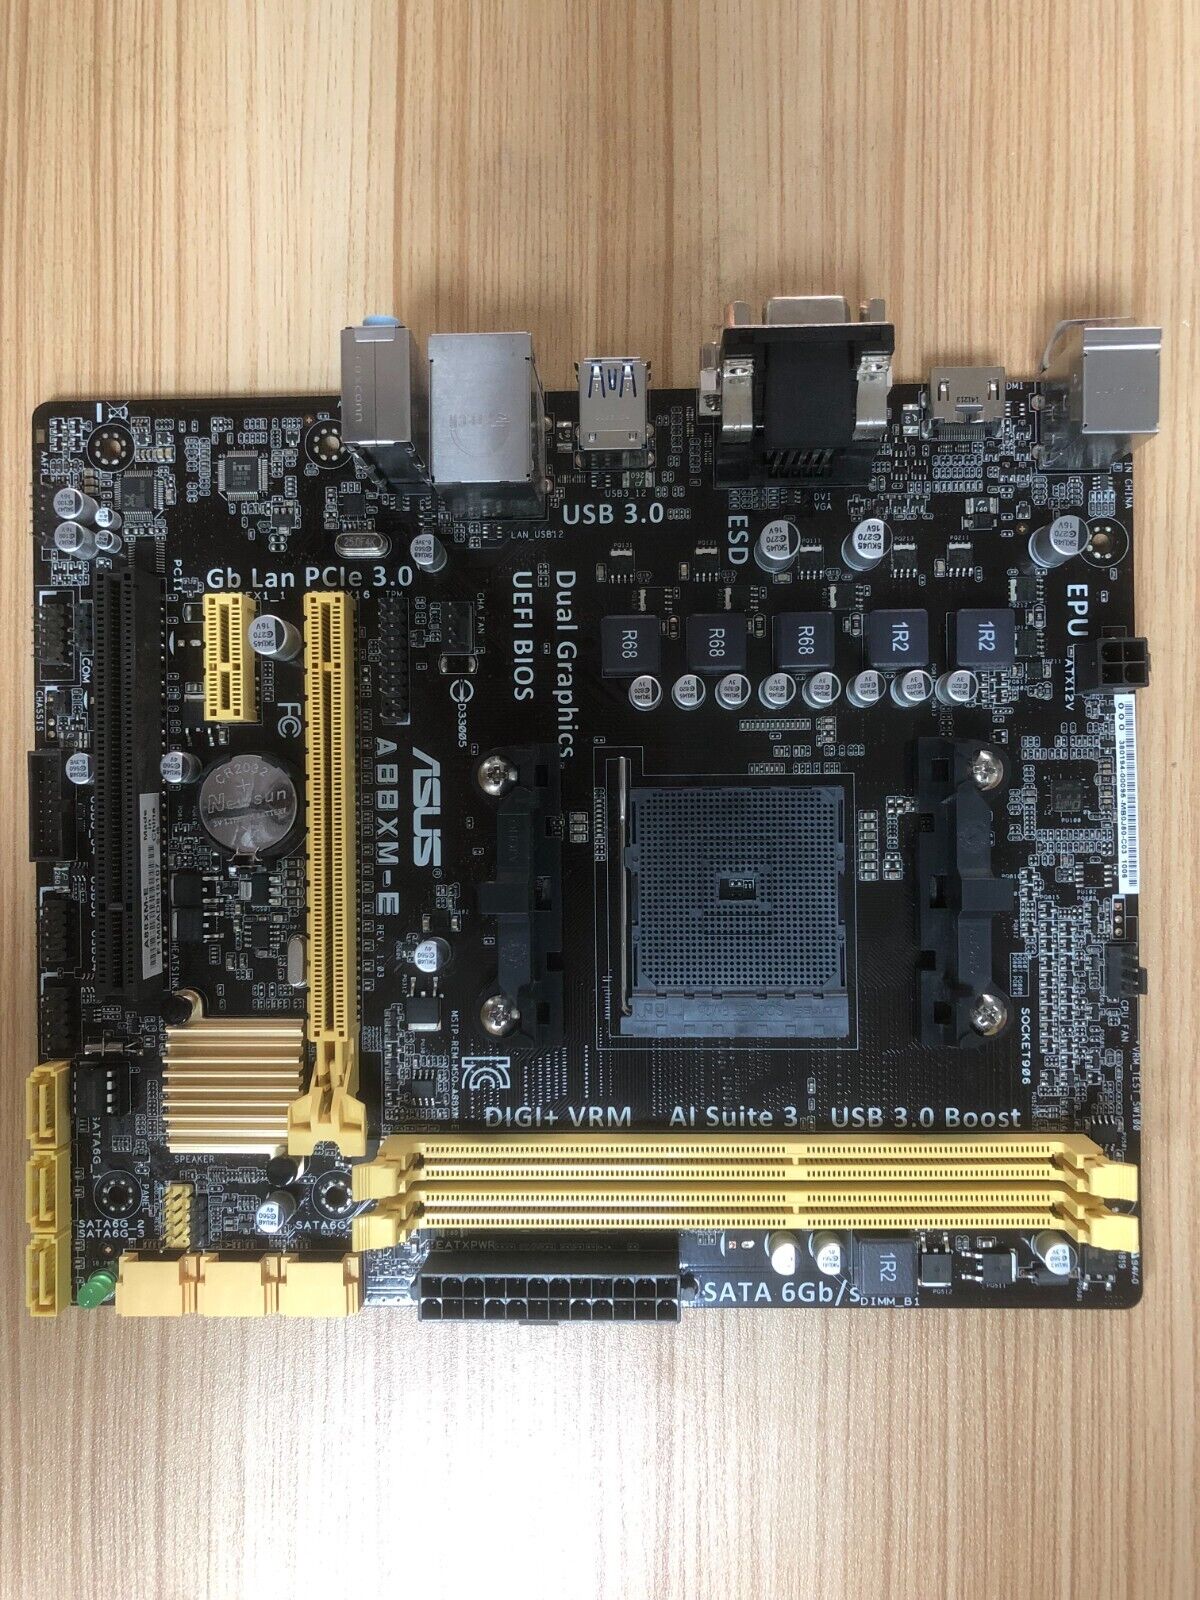 ASUS A88XM-E Motherboard M-ATX AMD A88X Socket FM2/FM2+ DDR3 SATA3 HDMI Tested